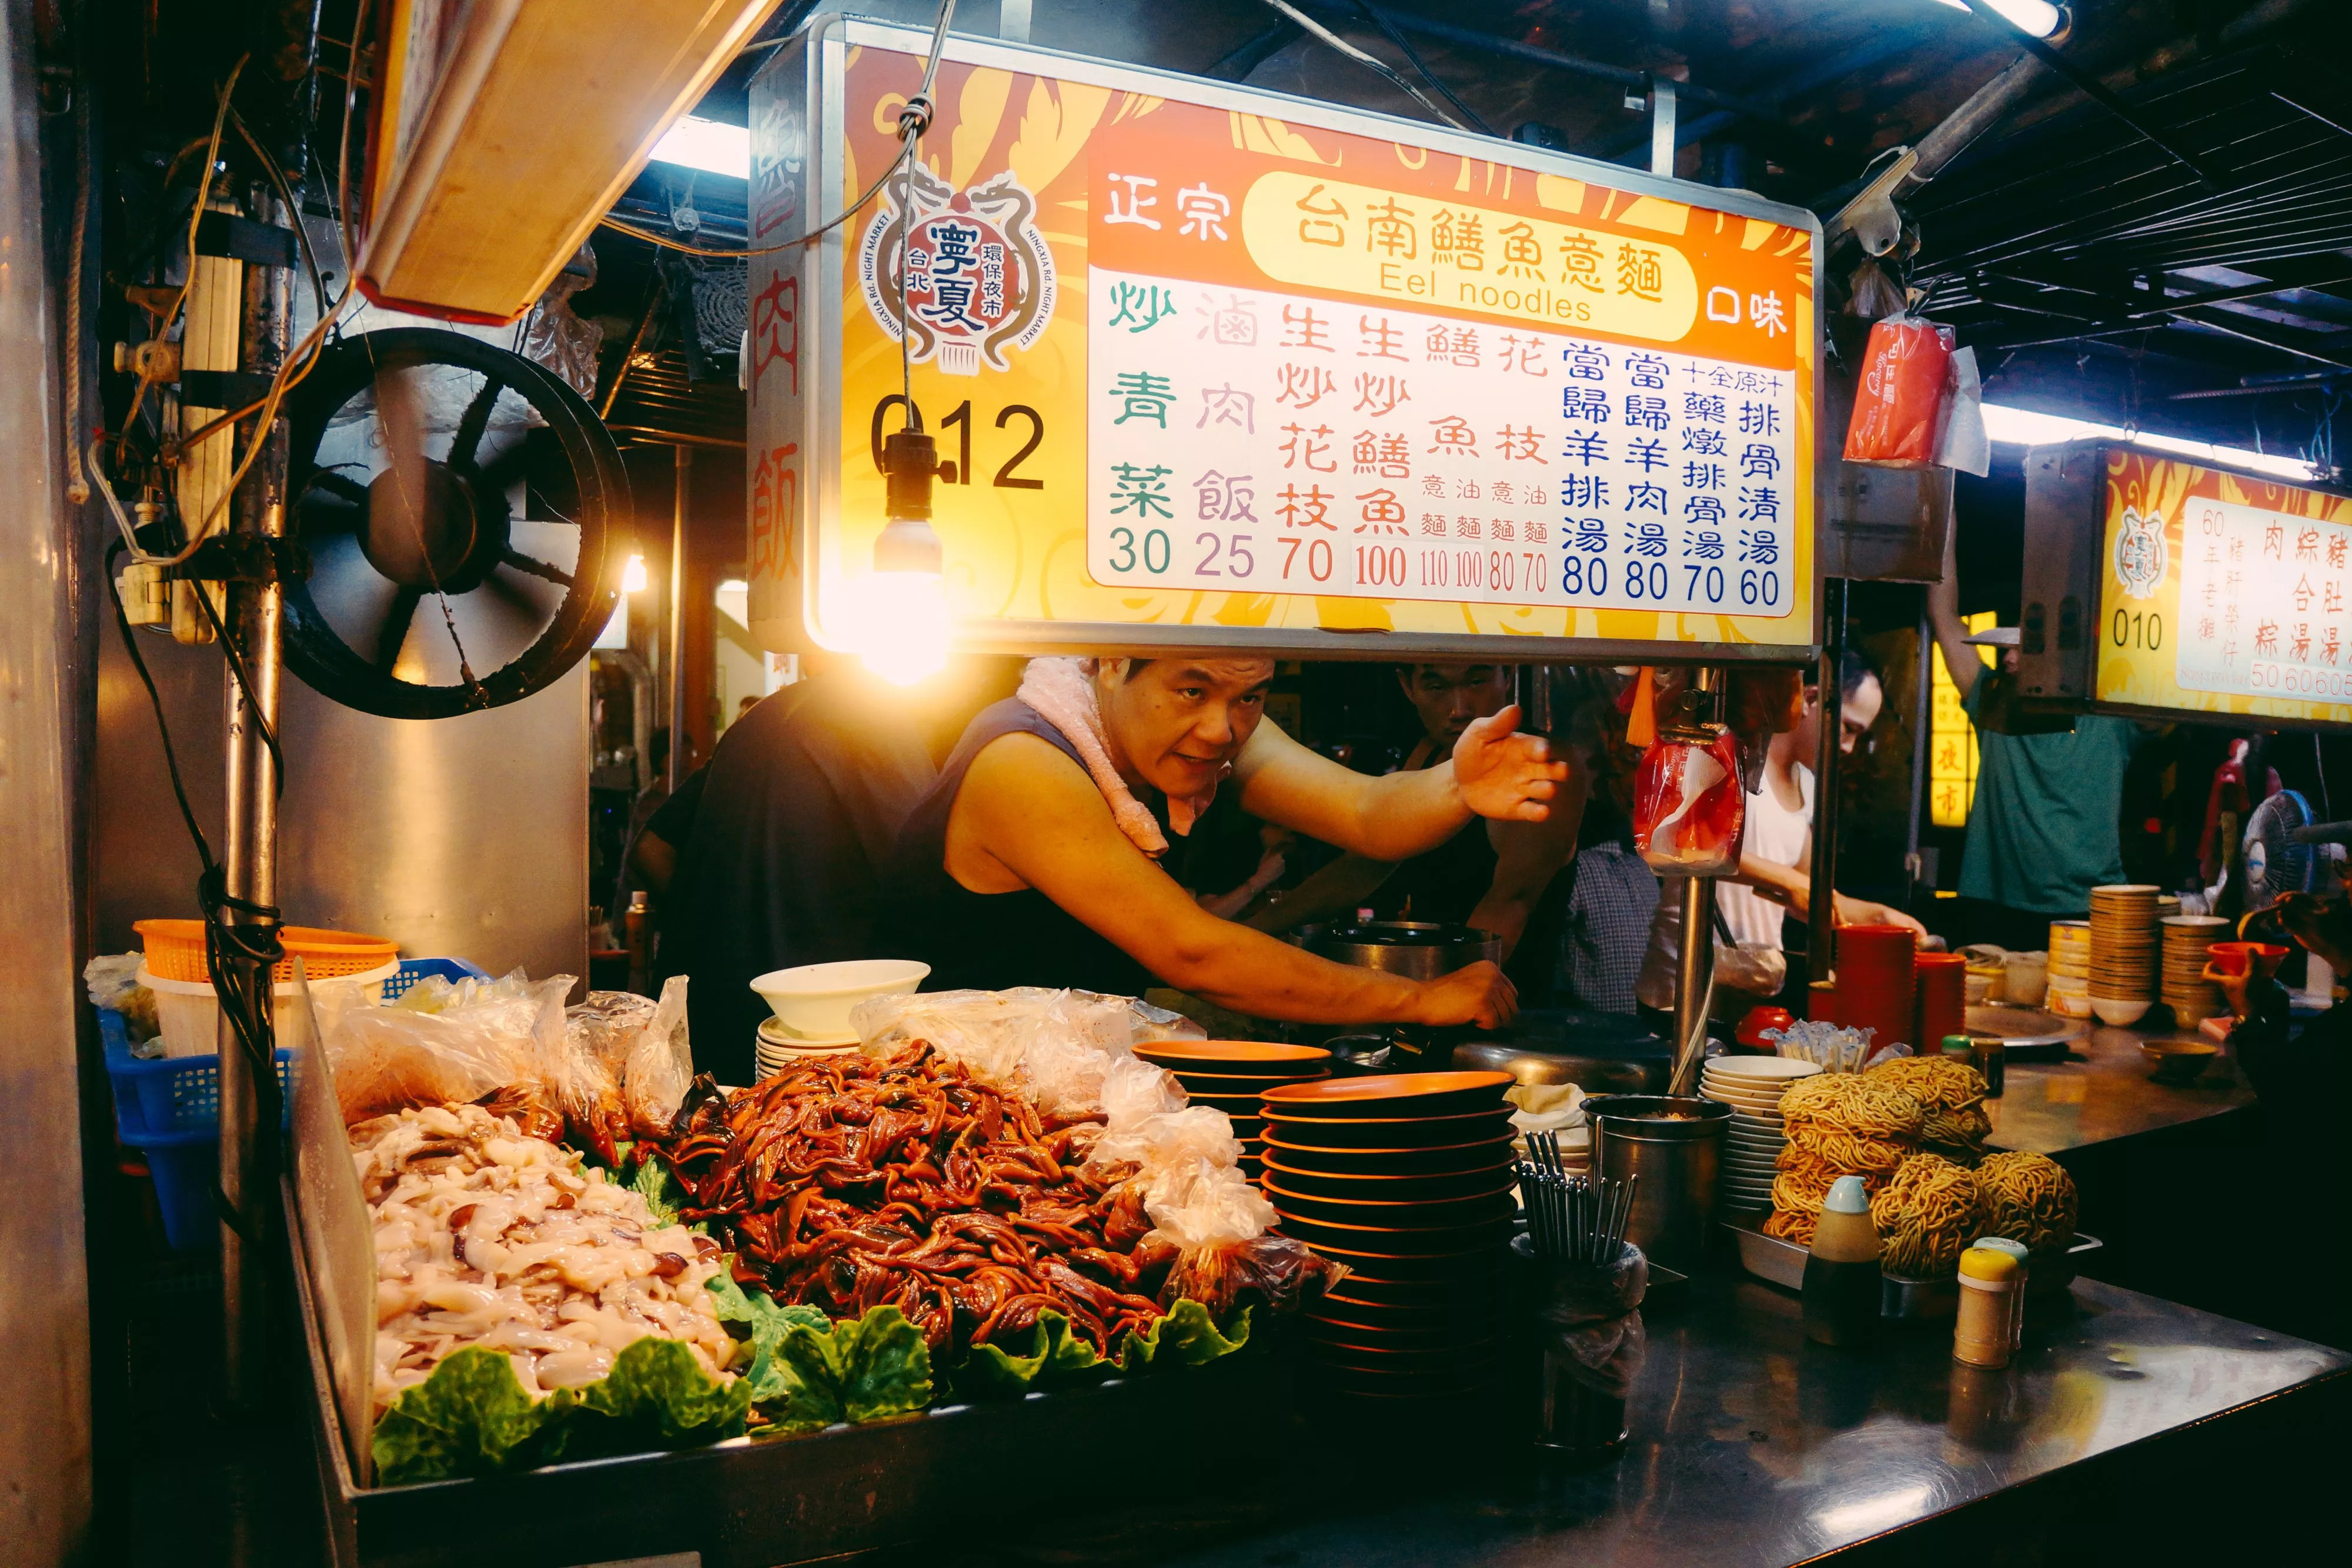 Taiyuan Night Market in Taiwan, East Asia | Street Food - Rated 4.3